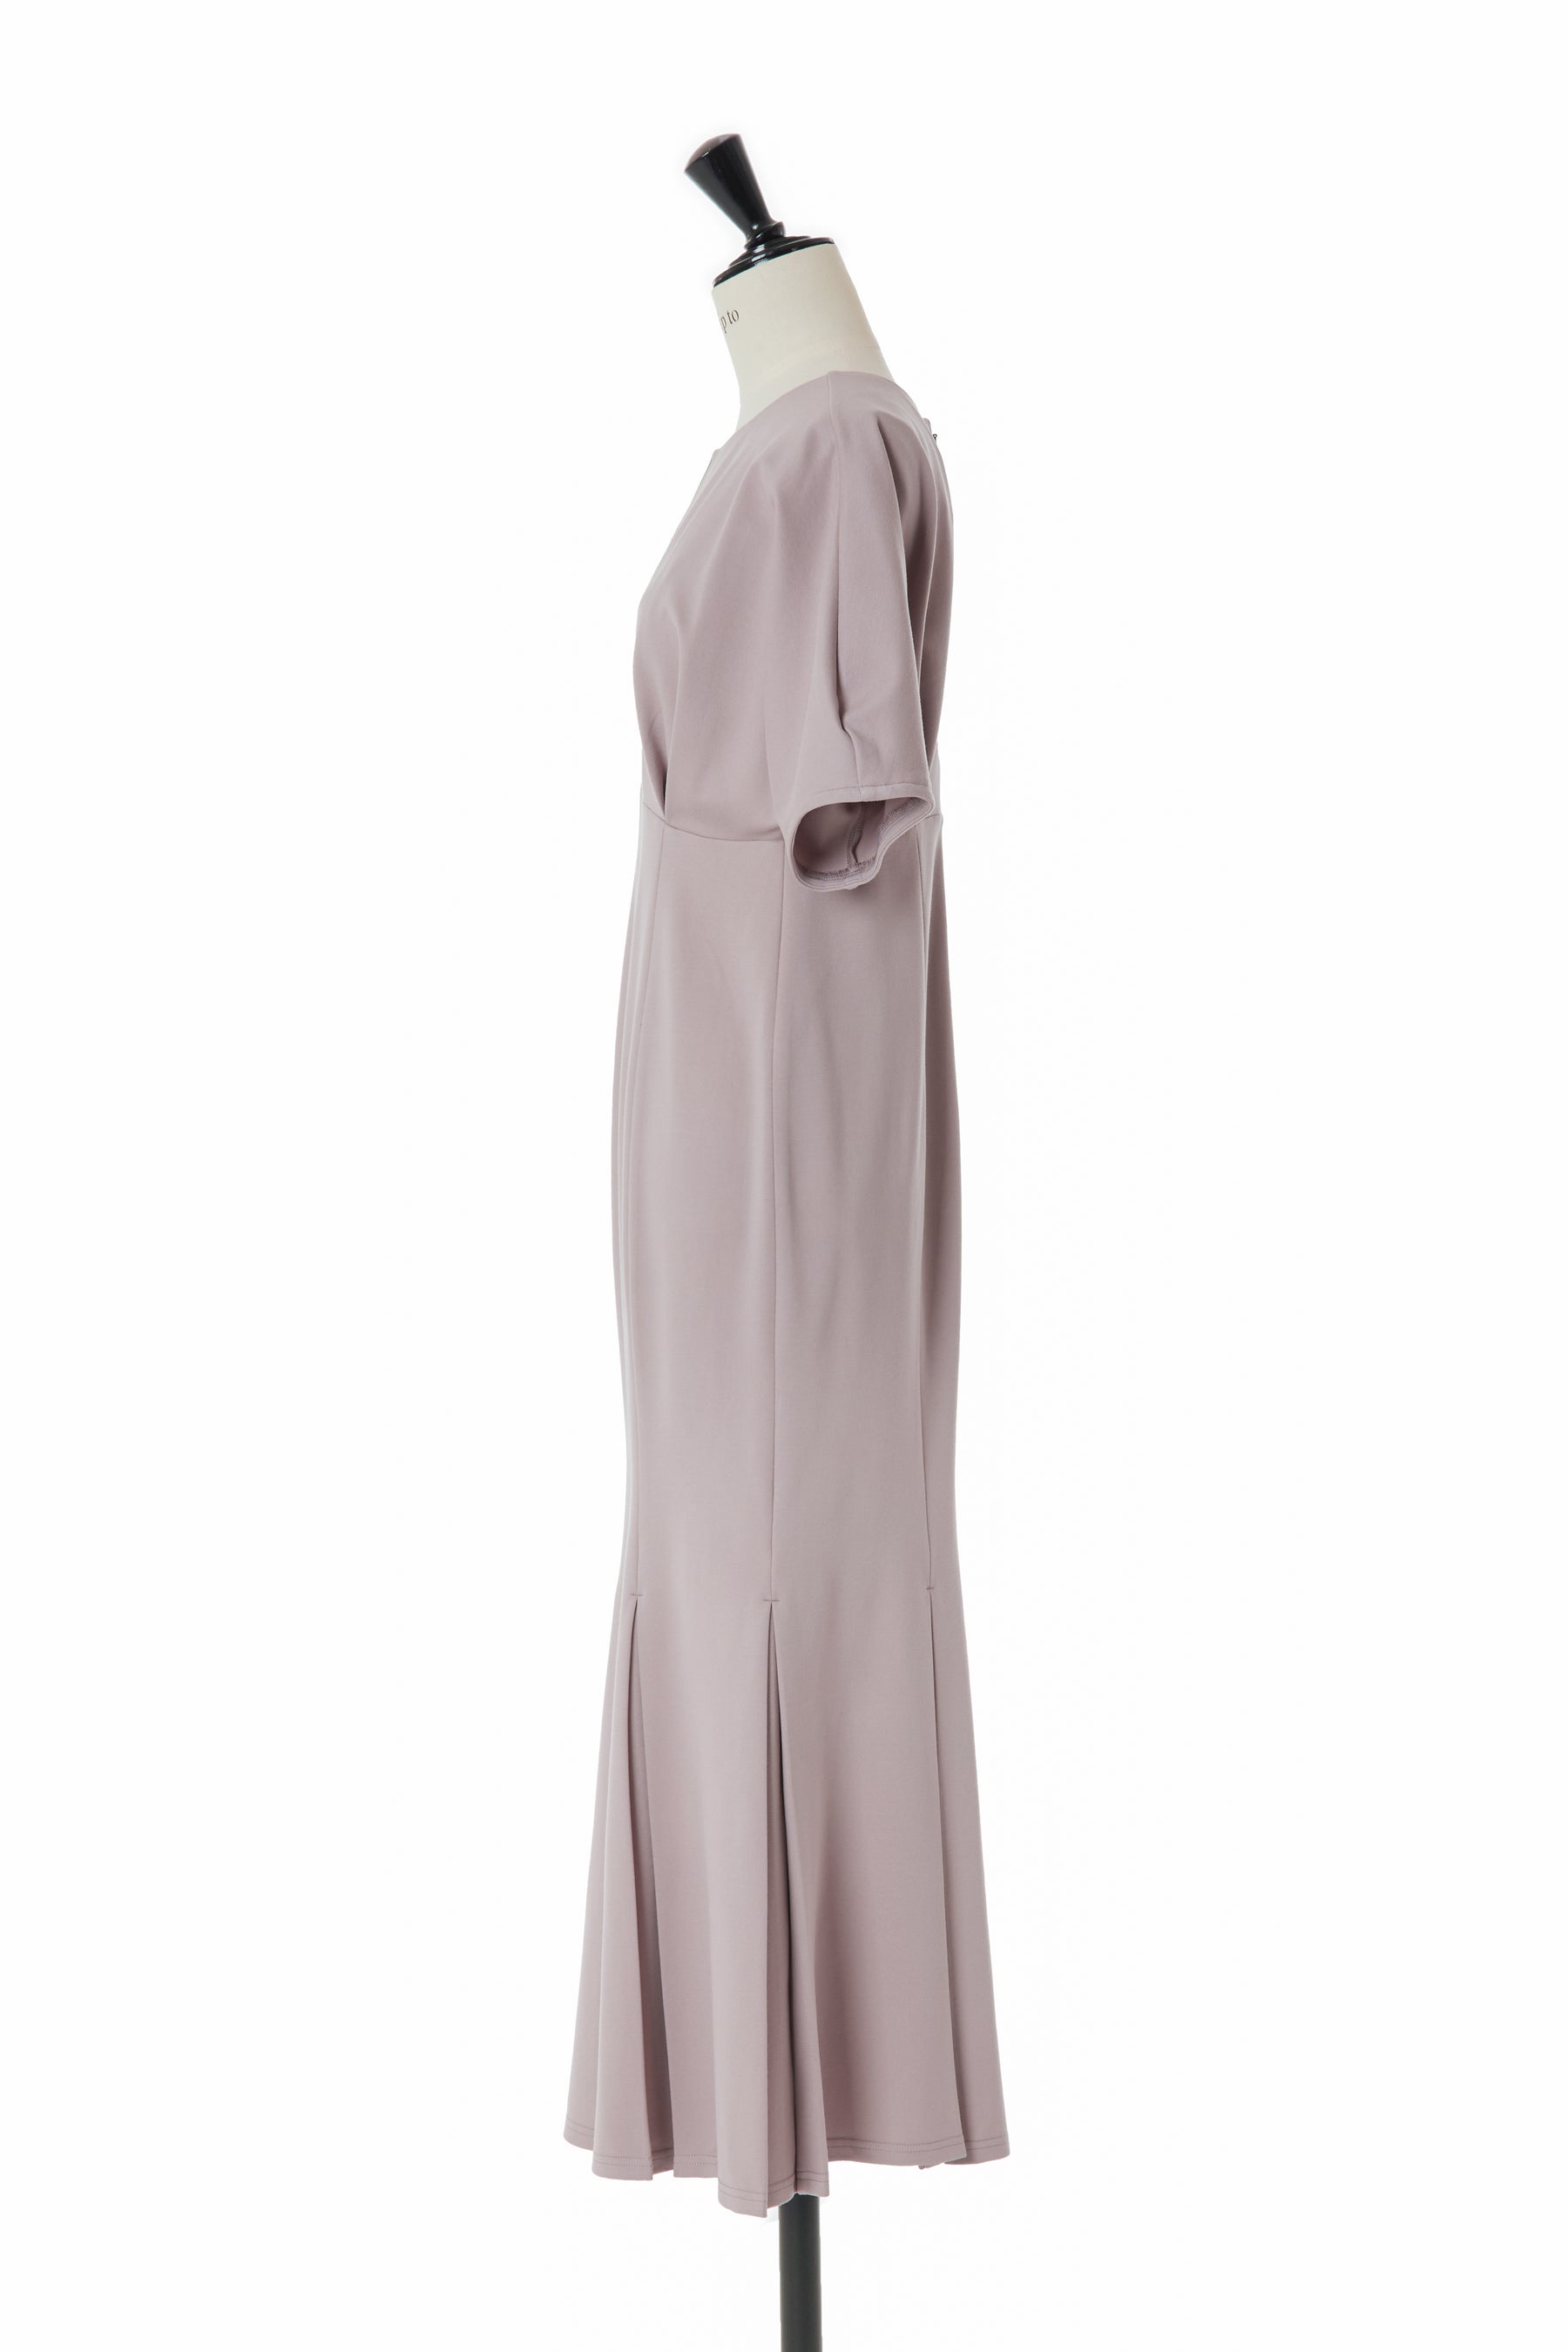 [Shipped in mid-March] Rhone Ponte Mermaid Dress